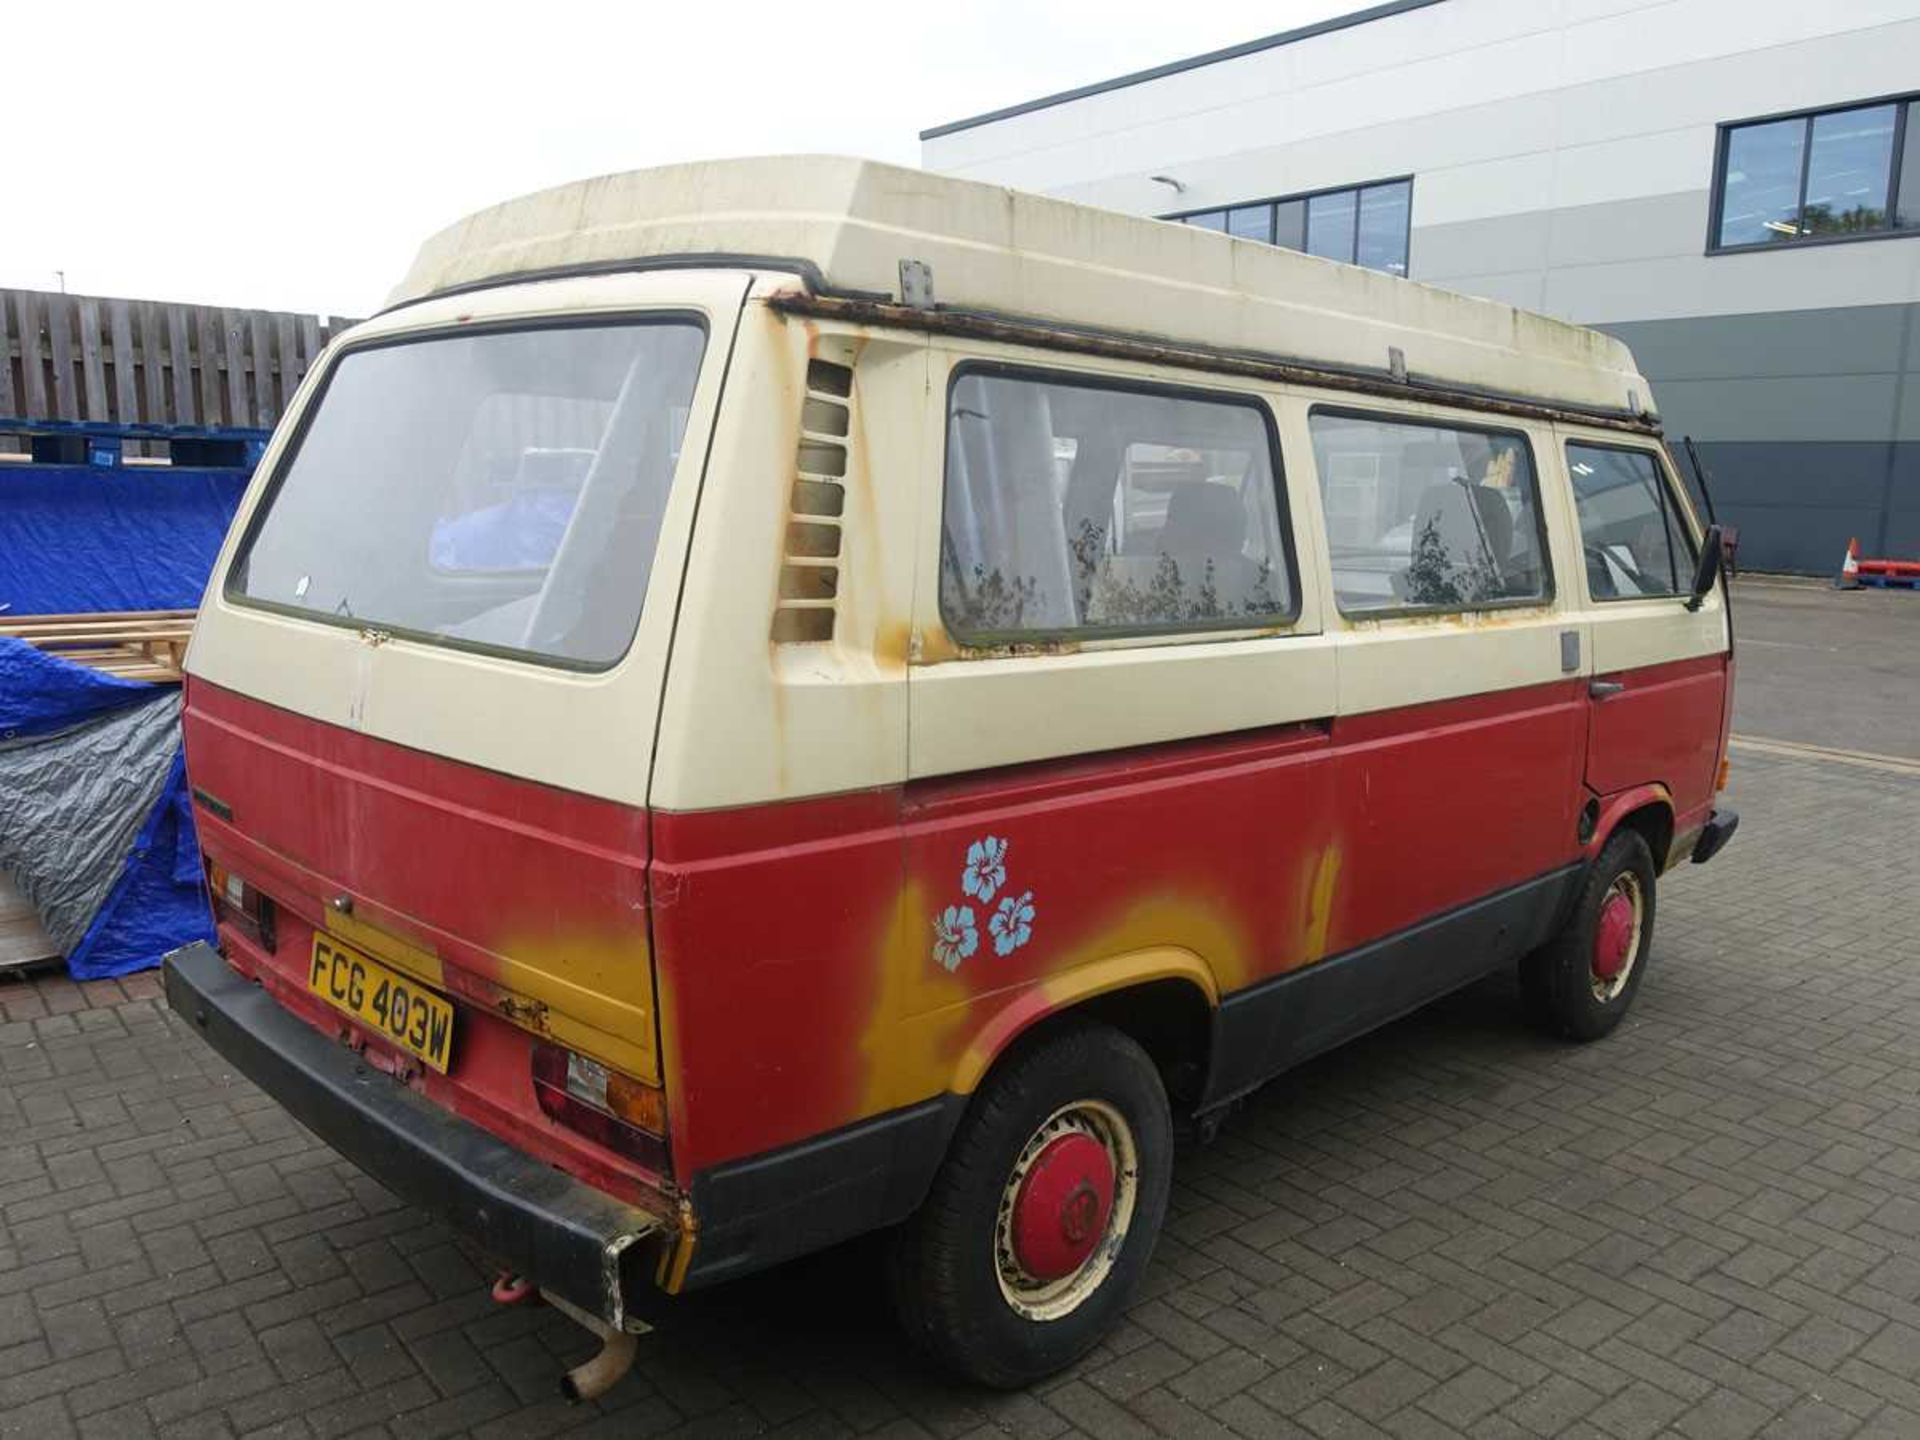 (FCG 403W) Volkswagen T25 Camper Van, Devon Moonraker in red and cream, with original gas fridge - Image 4 of 16